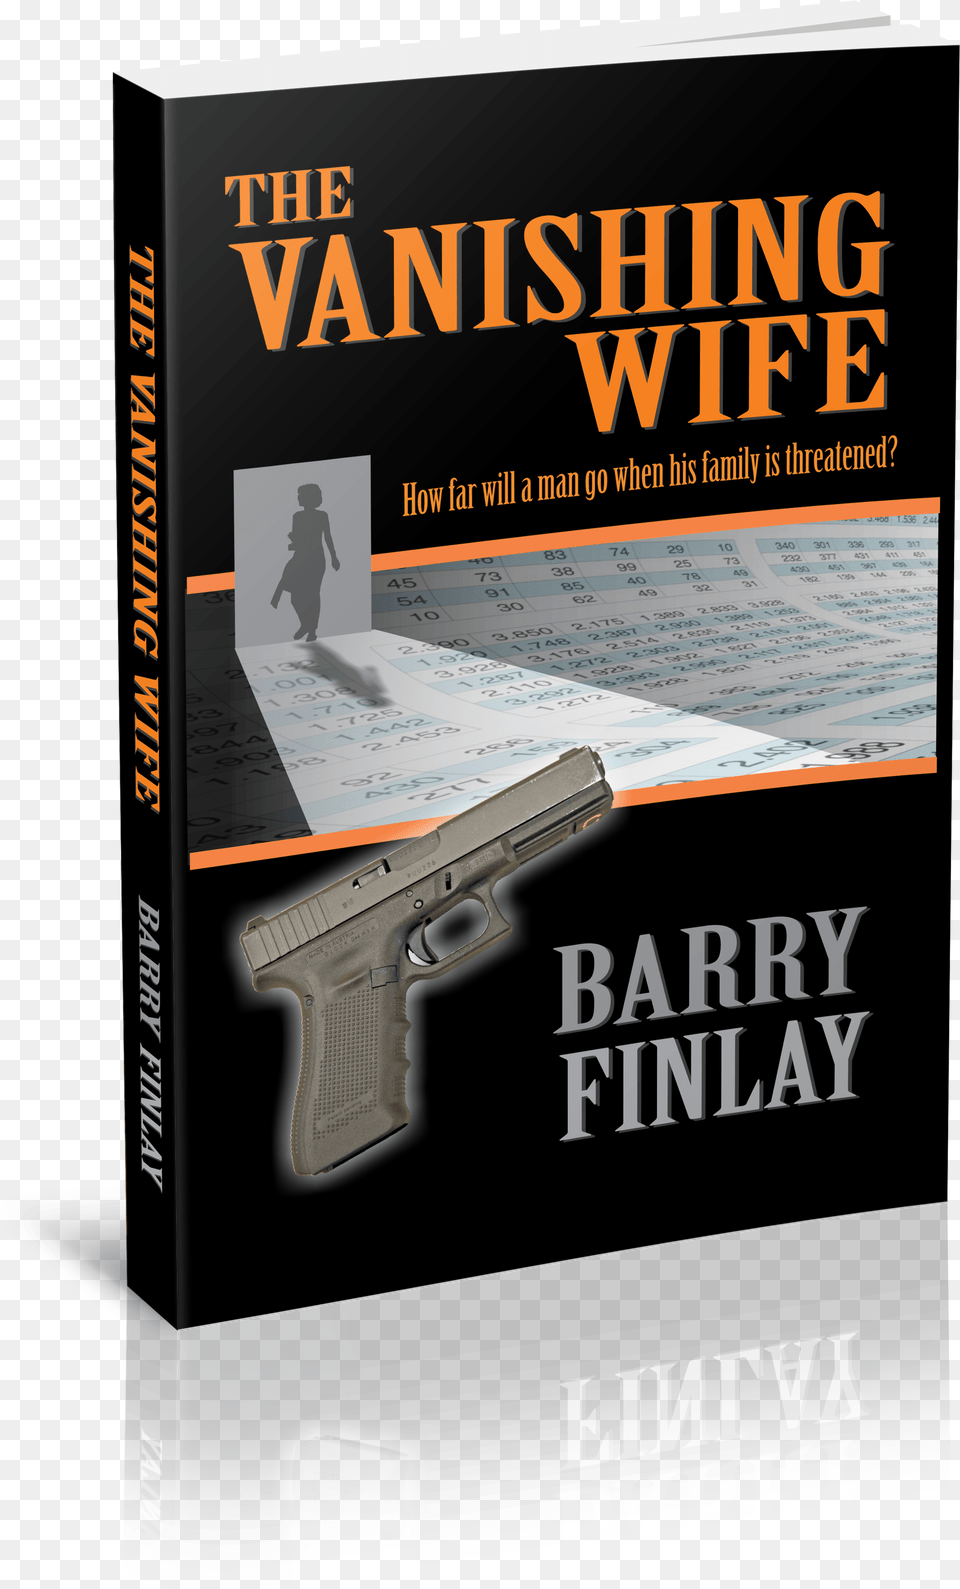 The Vanishing Wife Poster, Firearm, Gun, Handgun, Weapon Png Image